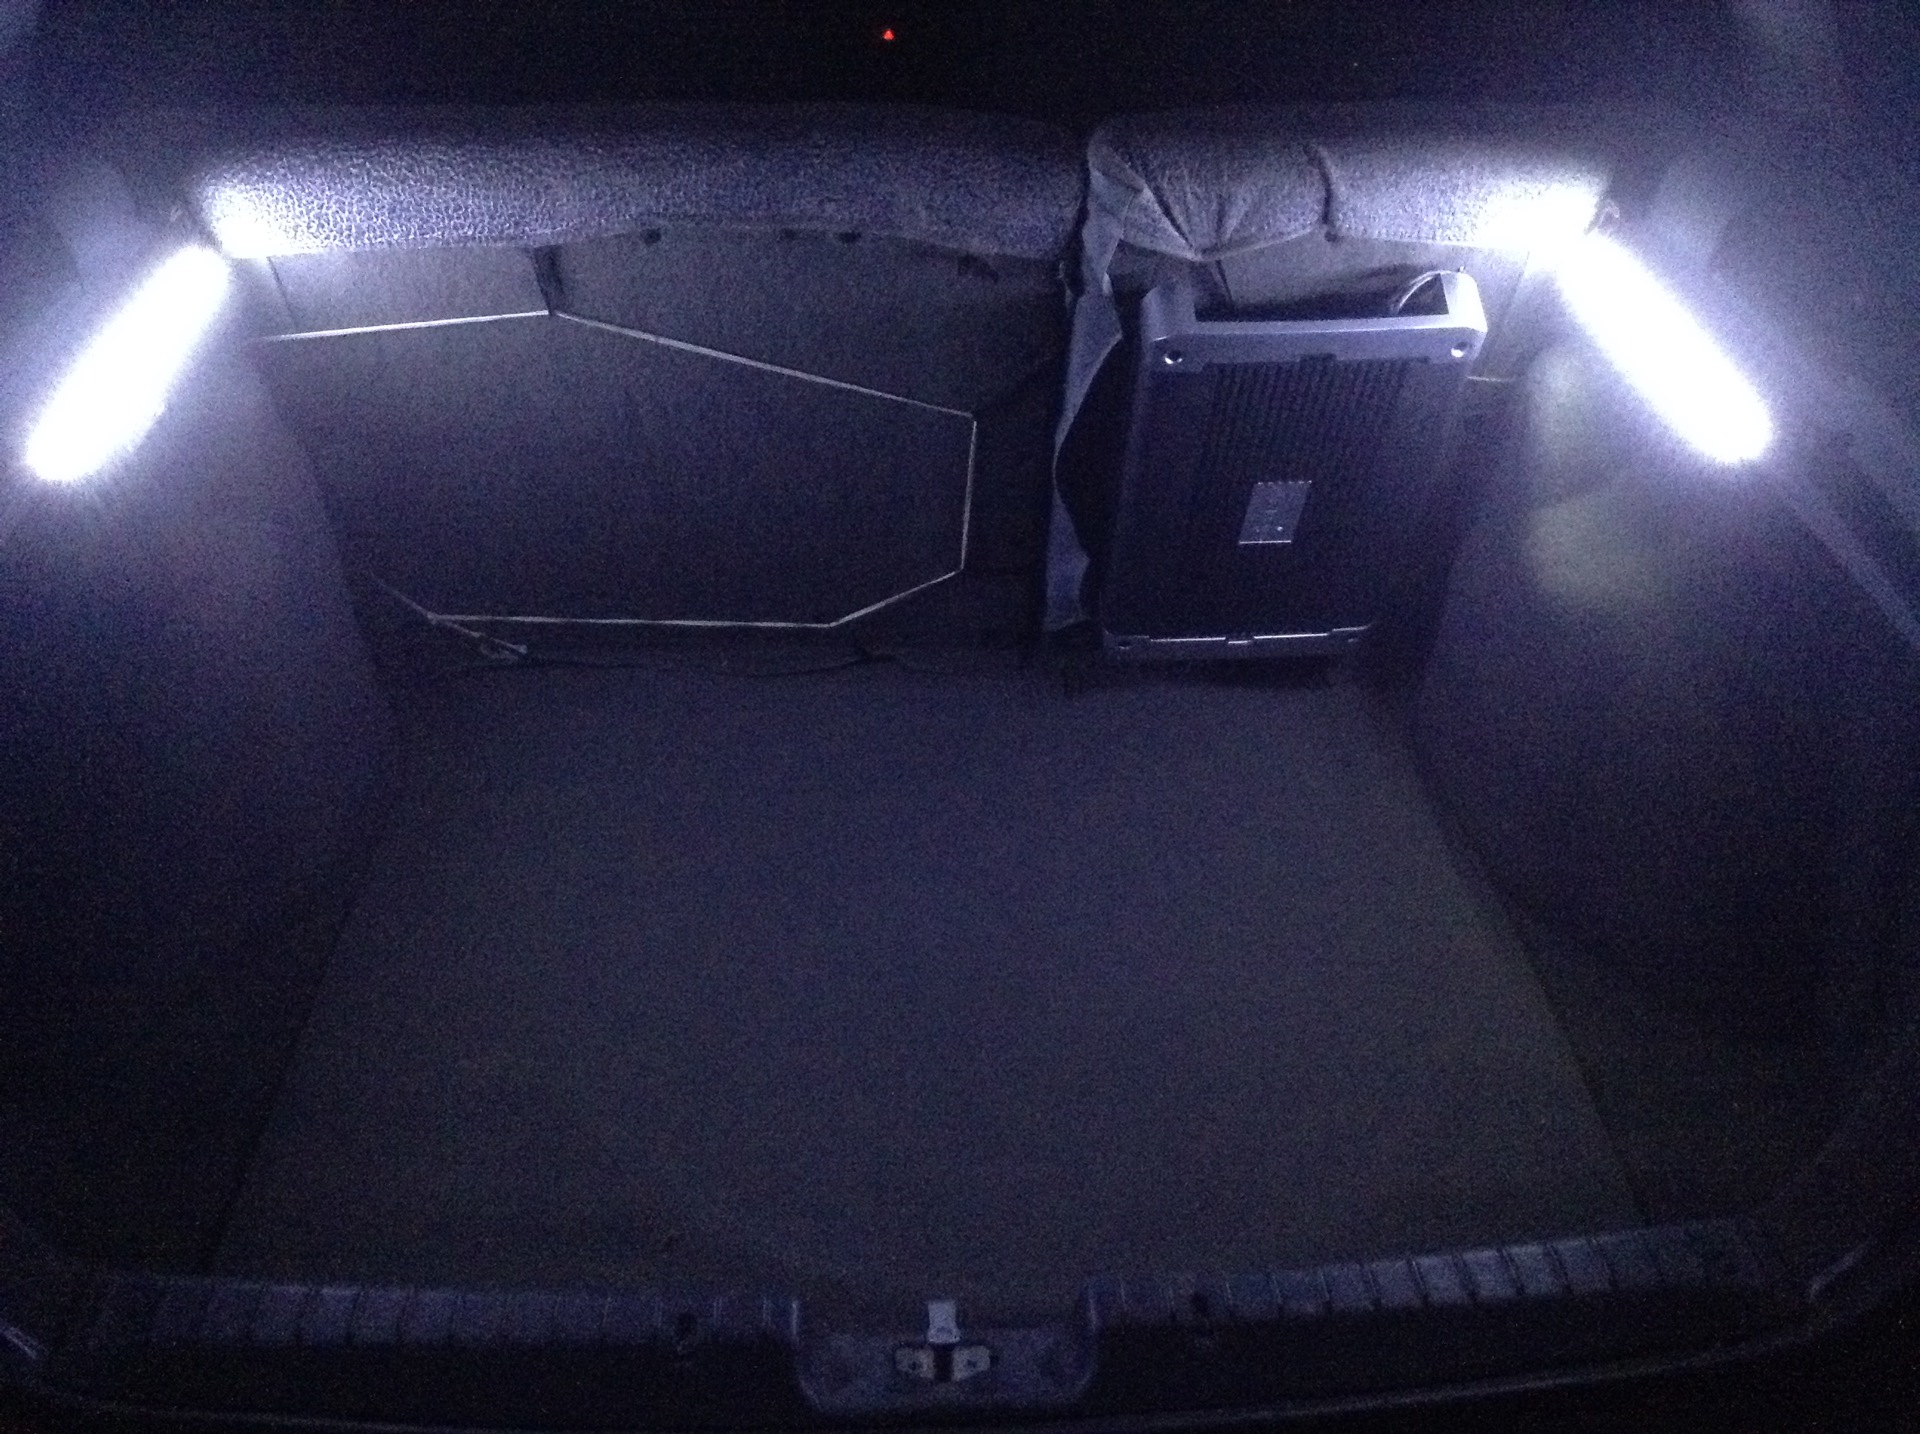 Лампа подсветки багажника Golf 4. Подсветка багажника Калина 1 универсал. Подсветка багажника ВАЗ 2106. Лампочка подсветки багажника Аккорд 6.